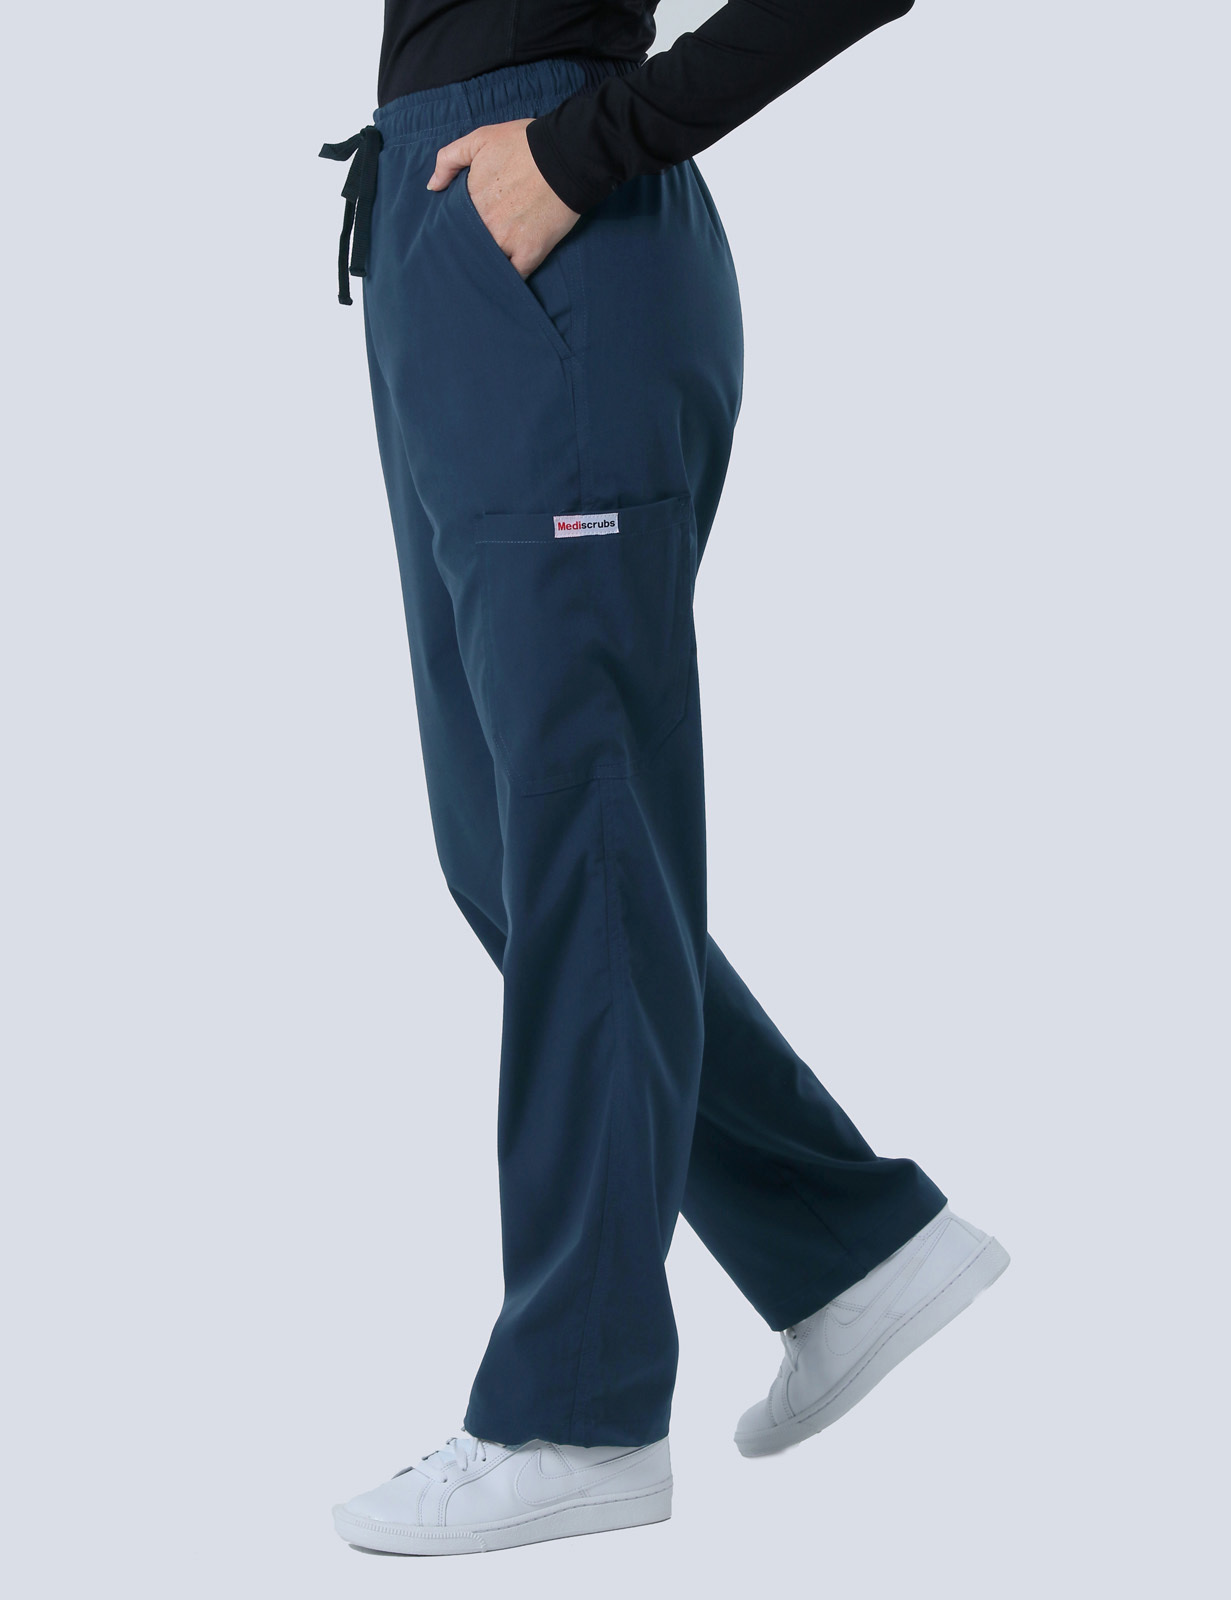 Frankston - AAAU/ANM (4 Pocket Scrub Top and Cargo Pants in Navy incl Logos)